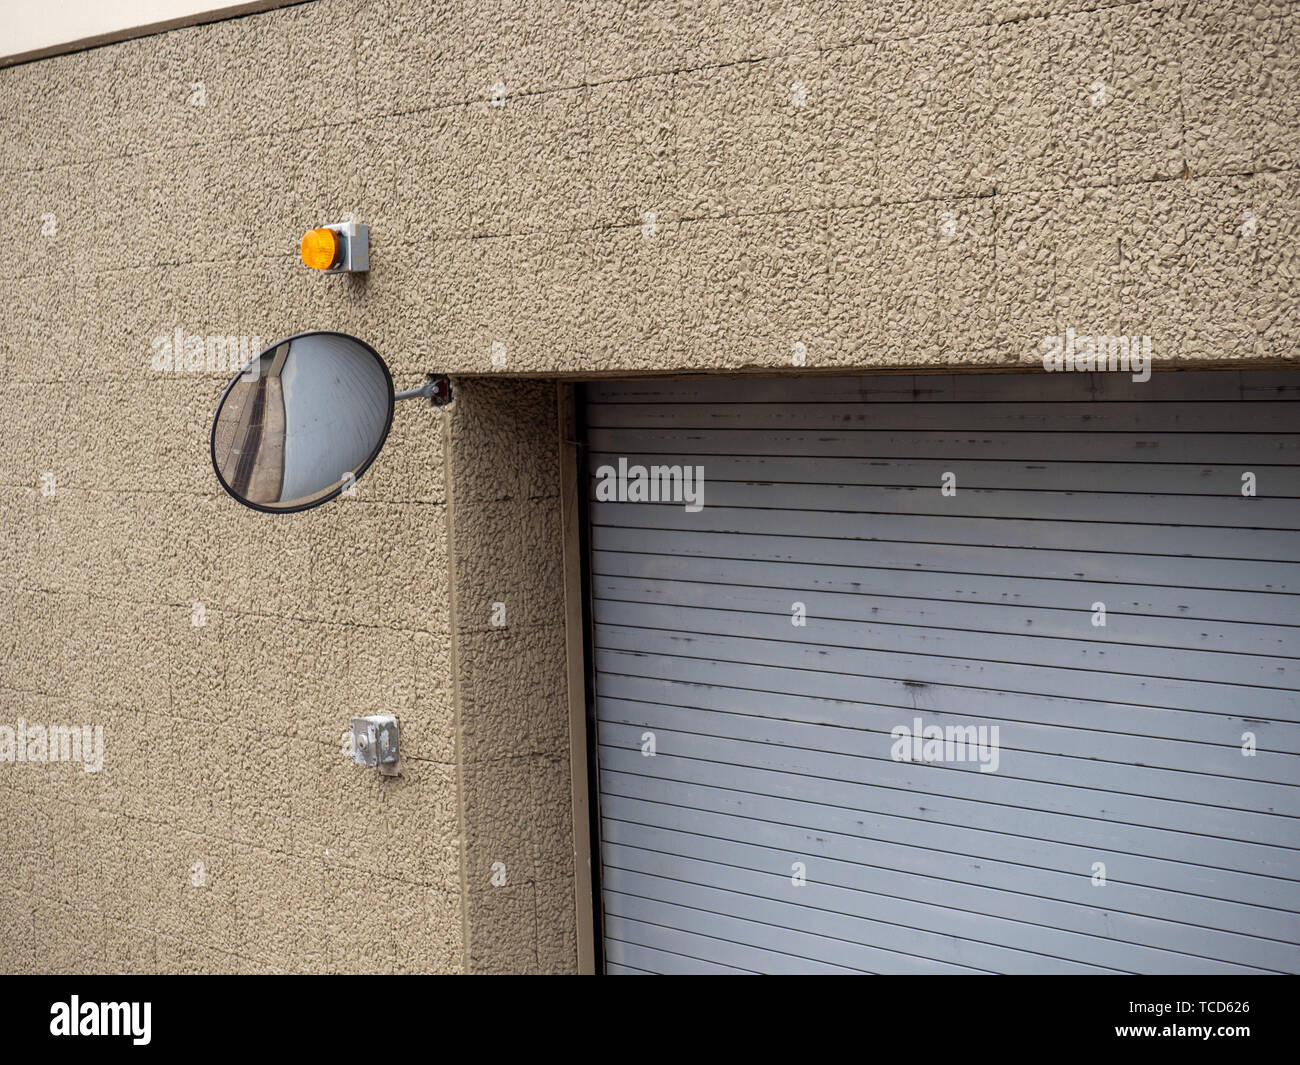 Safety mirror on corner of parking garage complex building entrance Stock Photo